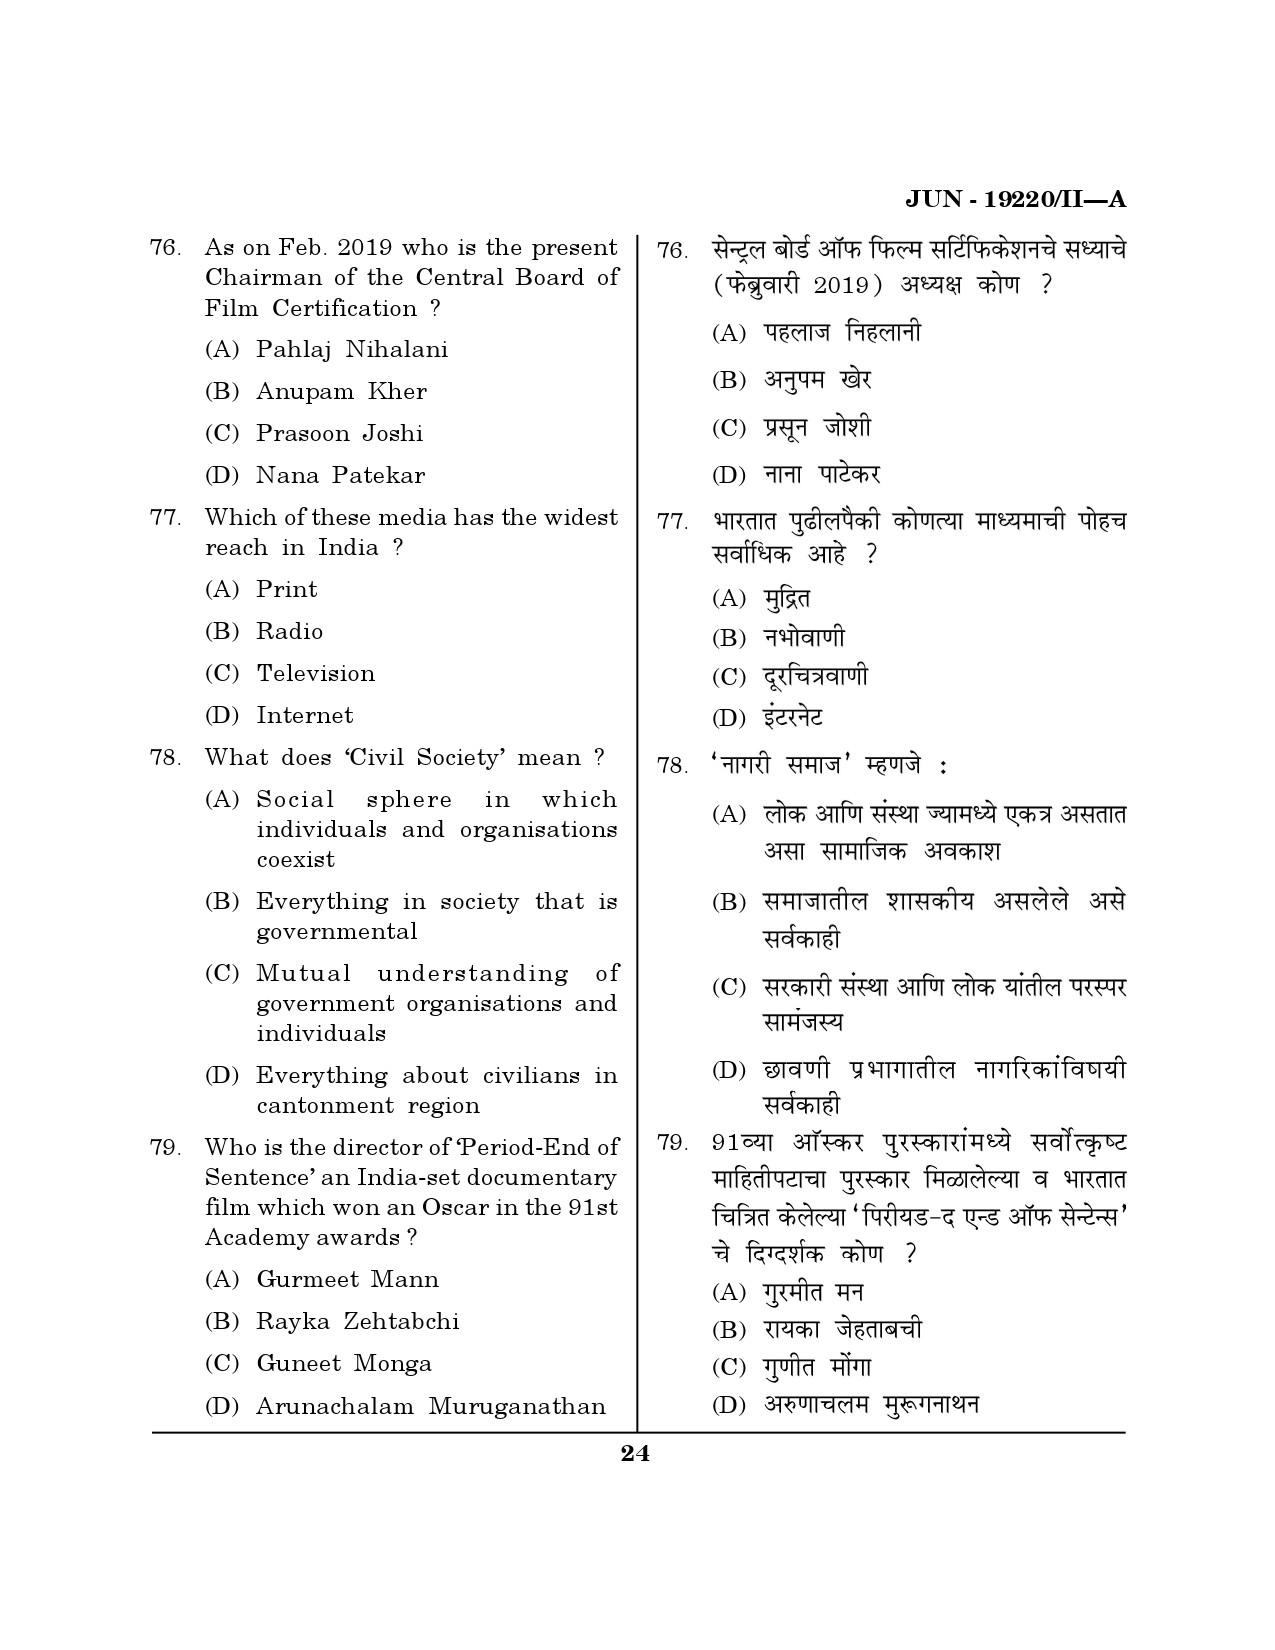 Maharashtra SET Journalism and Mass Communication Question Paper II June 2020 23